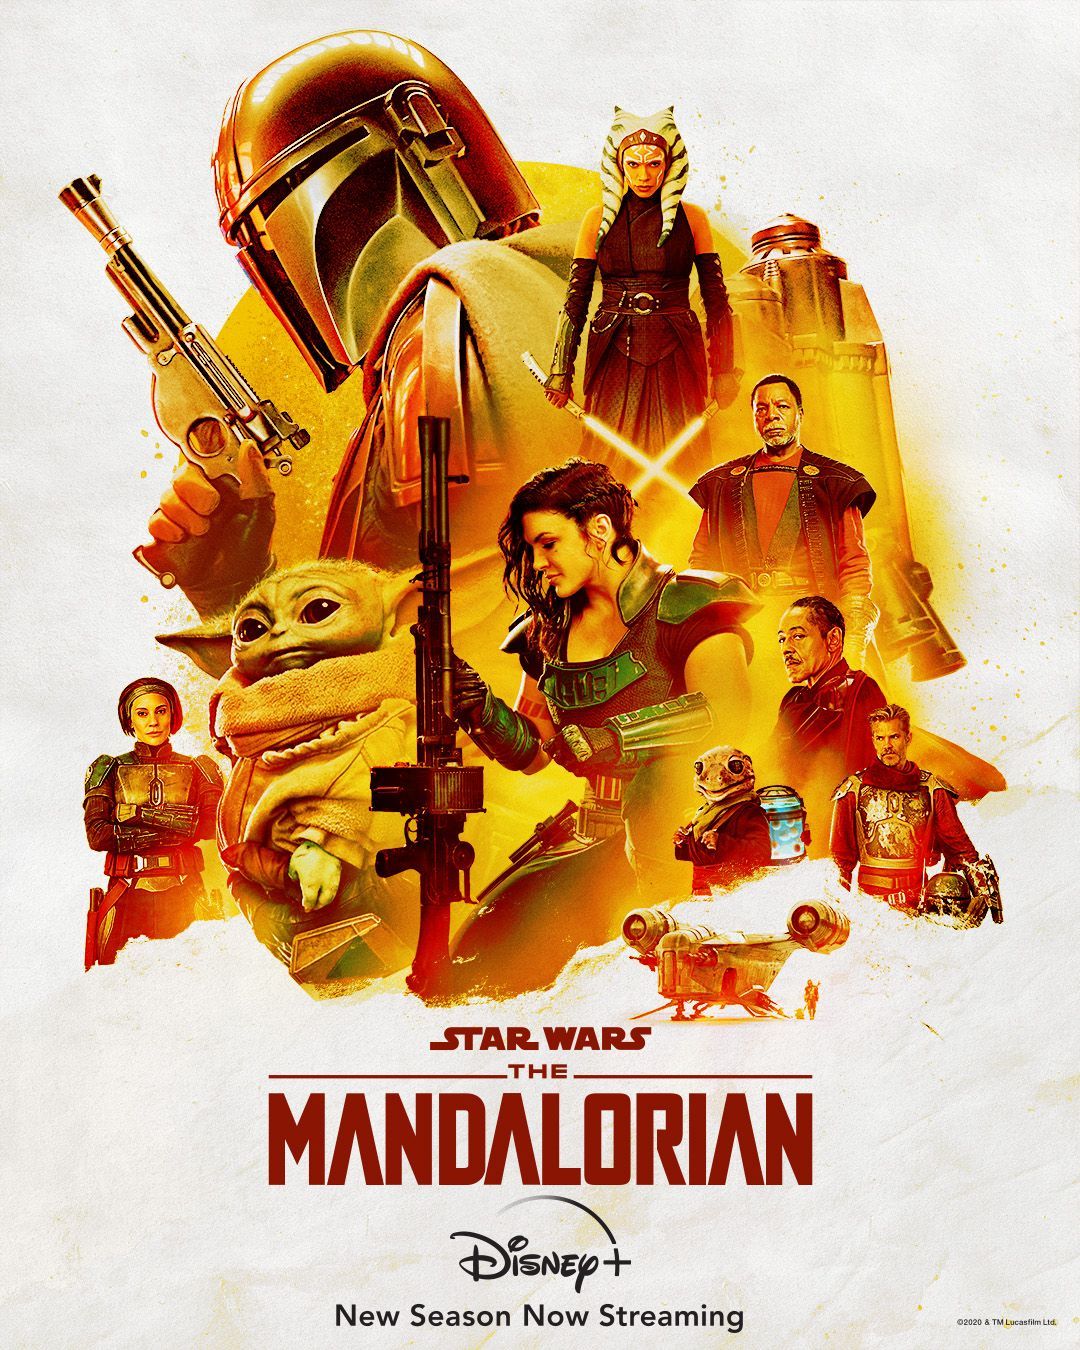 Mandalorian samler sin fulde rollebesætning i sæson 2 plakat